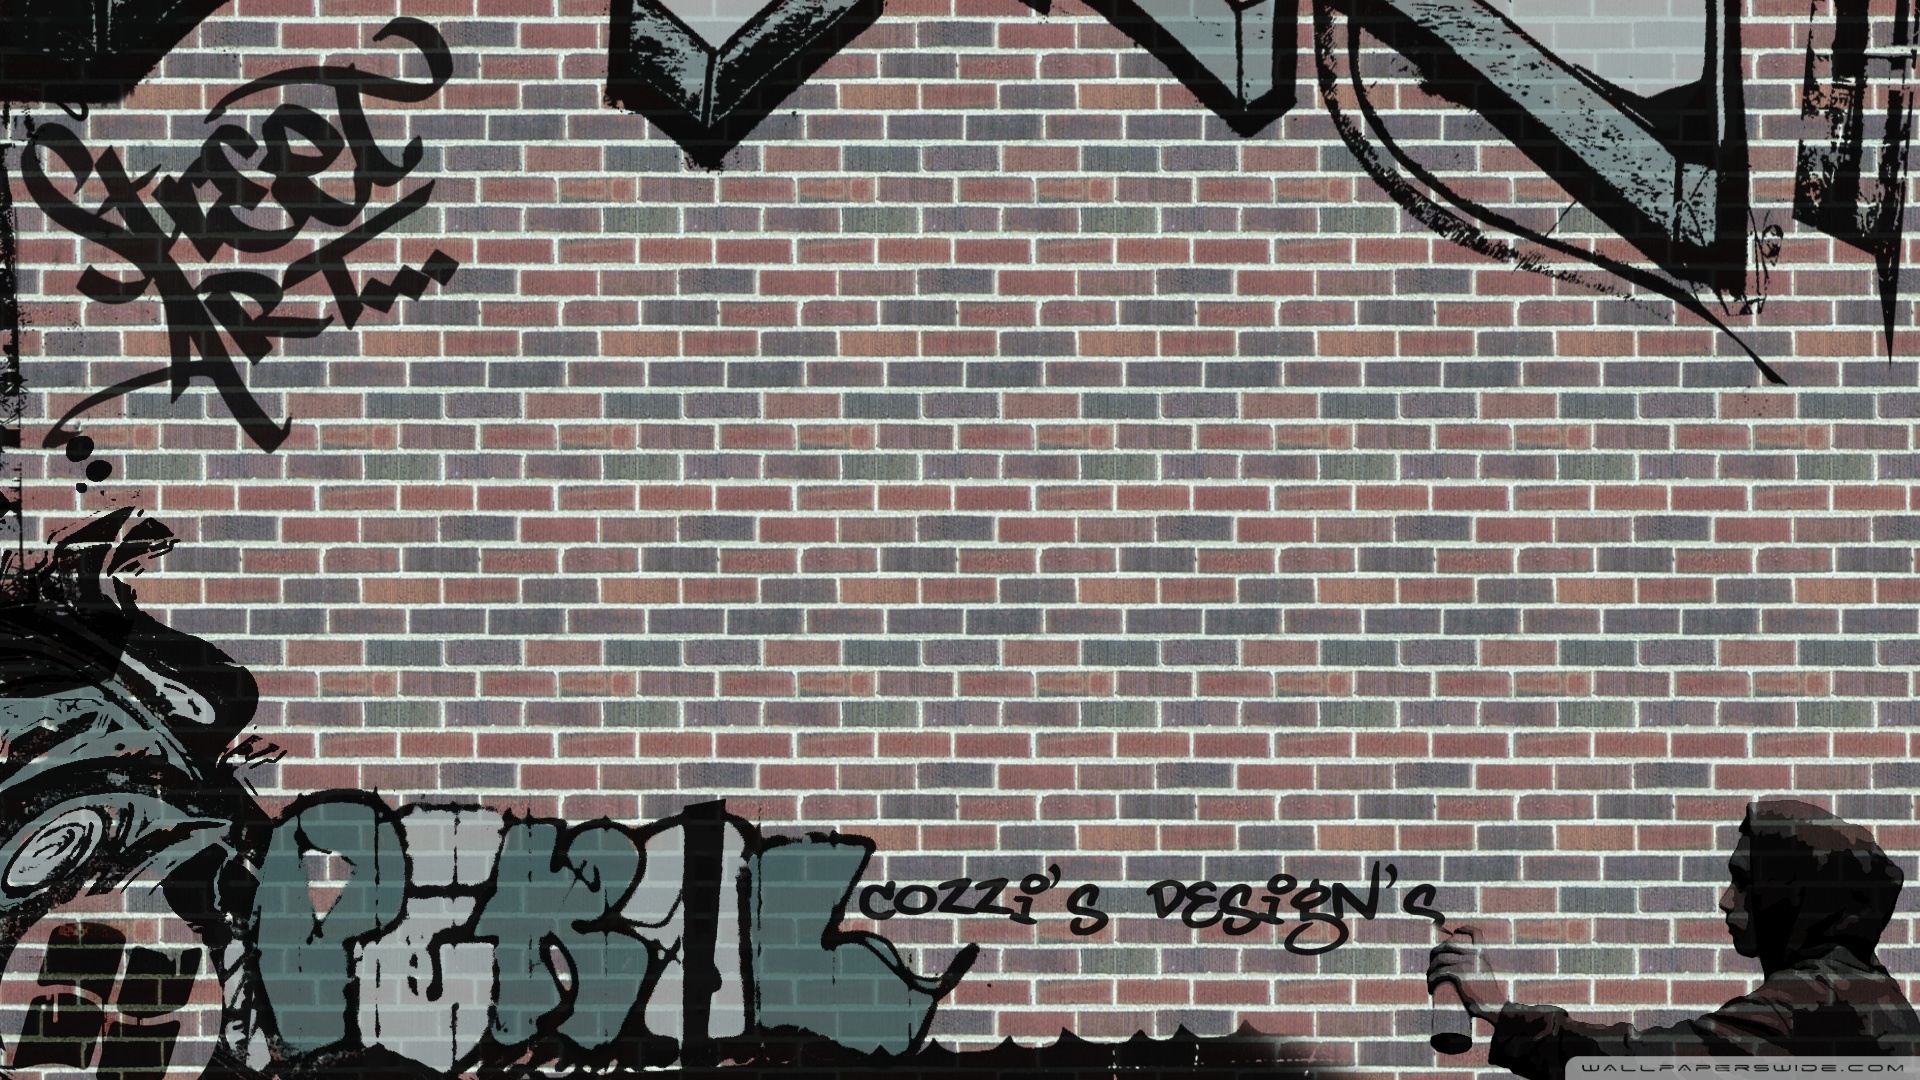 Free Download Graffiti Wallpaper Hd Hd 19x1080 For Your Desktop Mobile Tablet Explore 75 Hd Graffiti Wallpaper Wallpaper Graffiti Free Graffiti Wallpaper Cool Graffiti Wallpaper